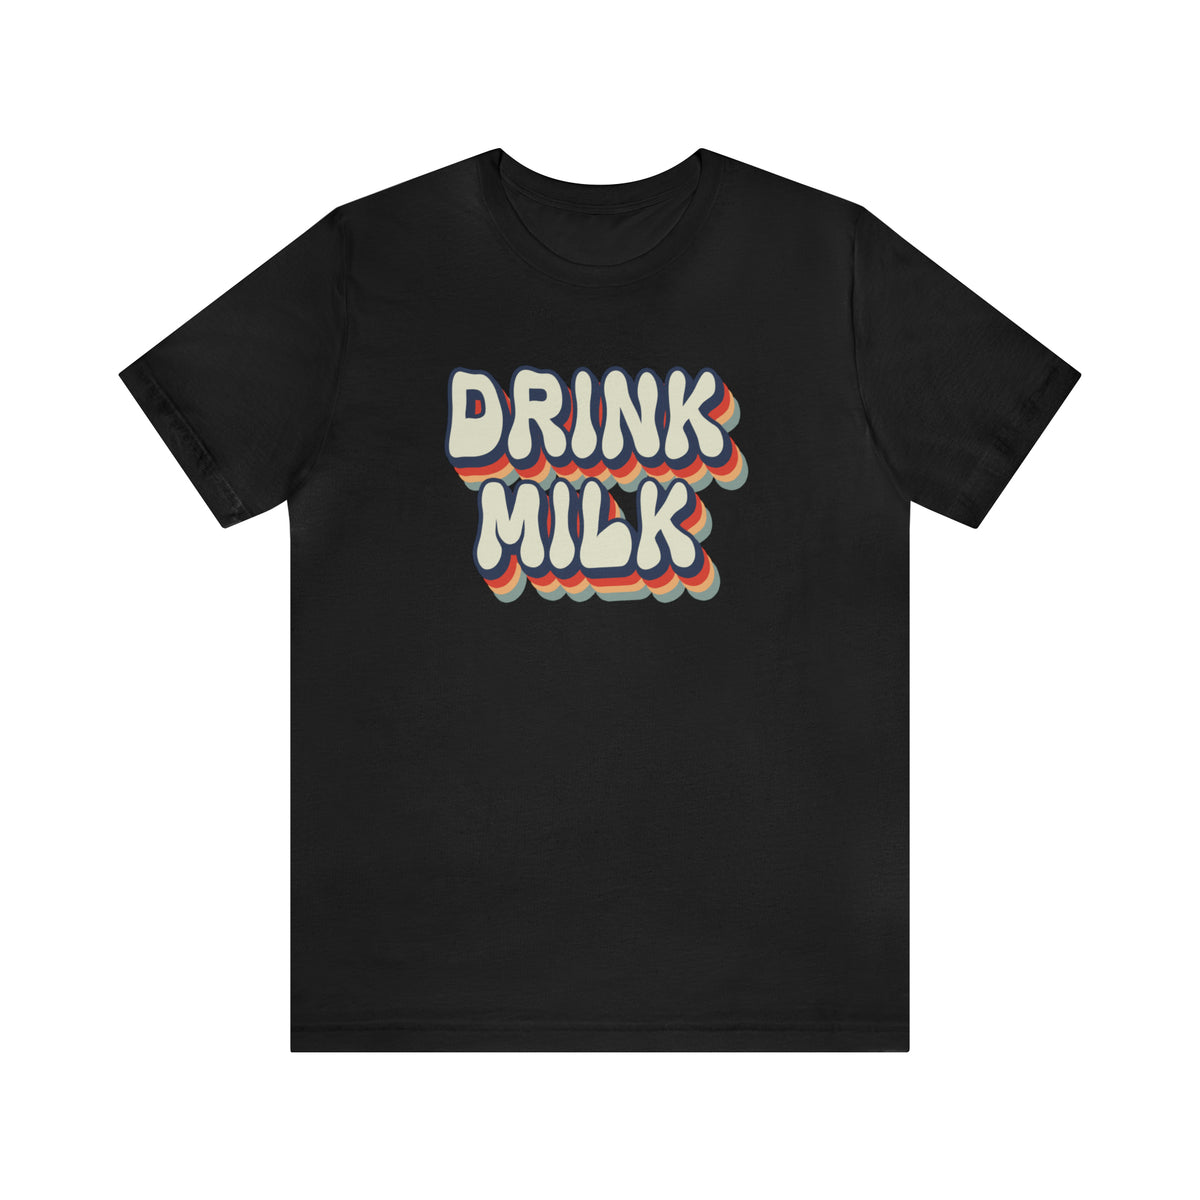 Funny Shirt For Milk Lovers - Drink Milk - Vintage - Retro - Birthday Present - Christmas Gift - Tee